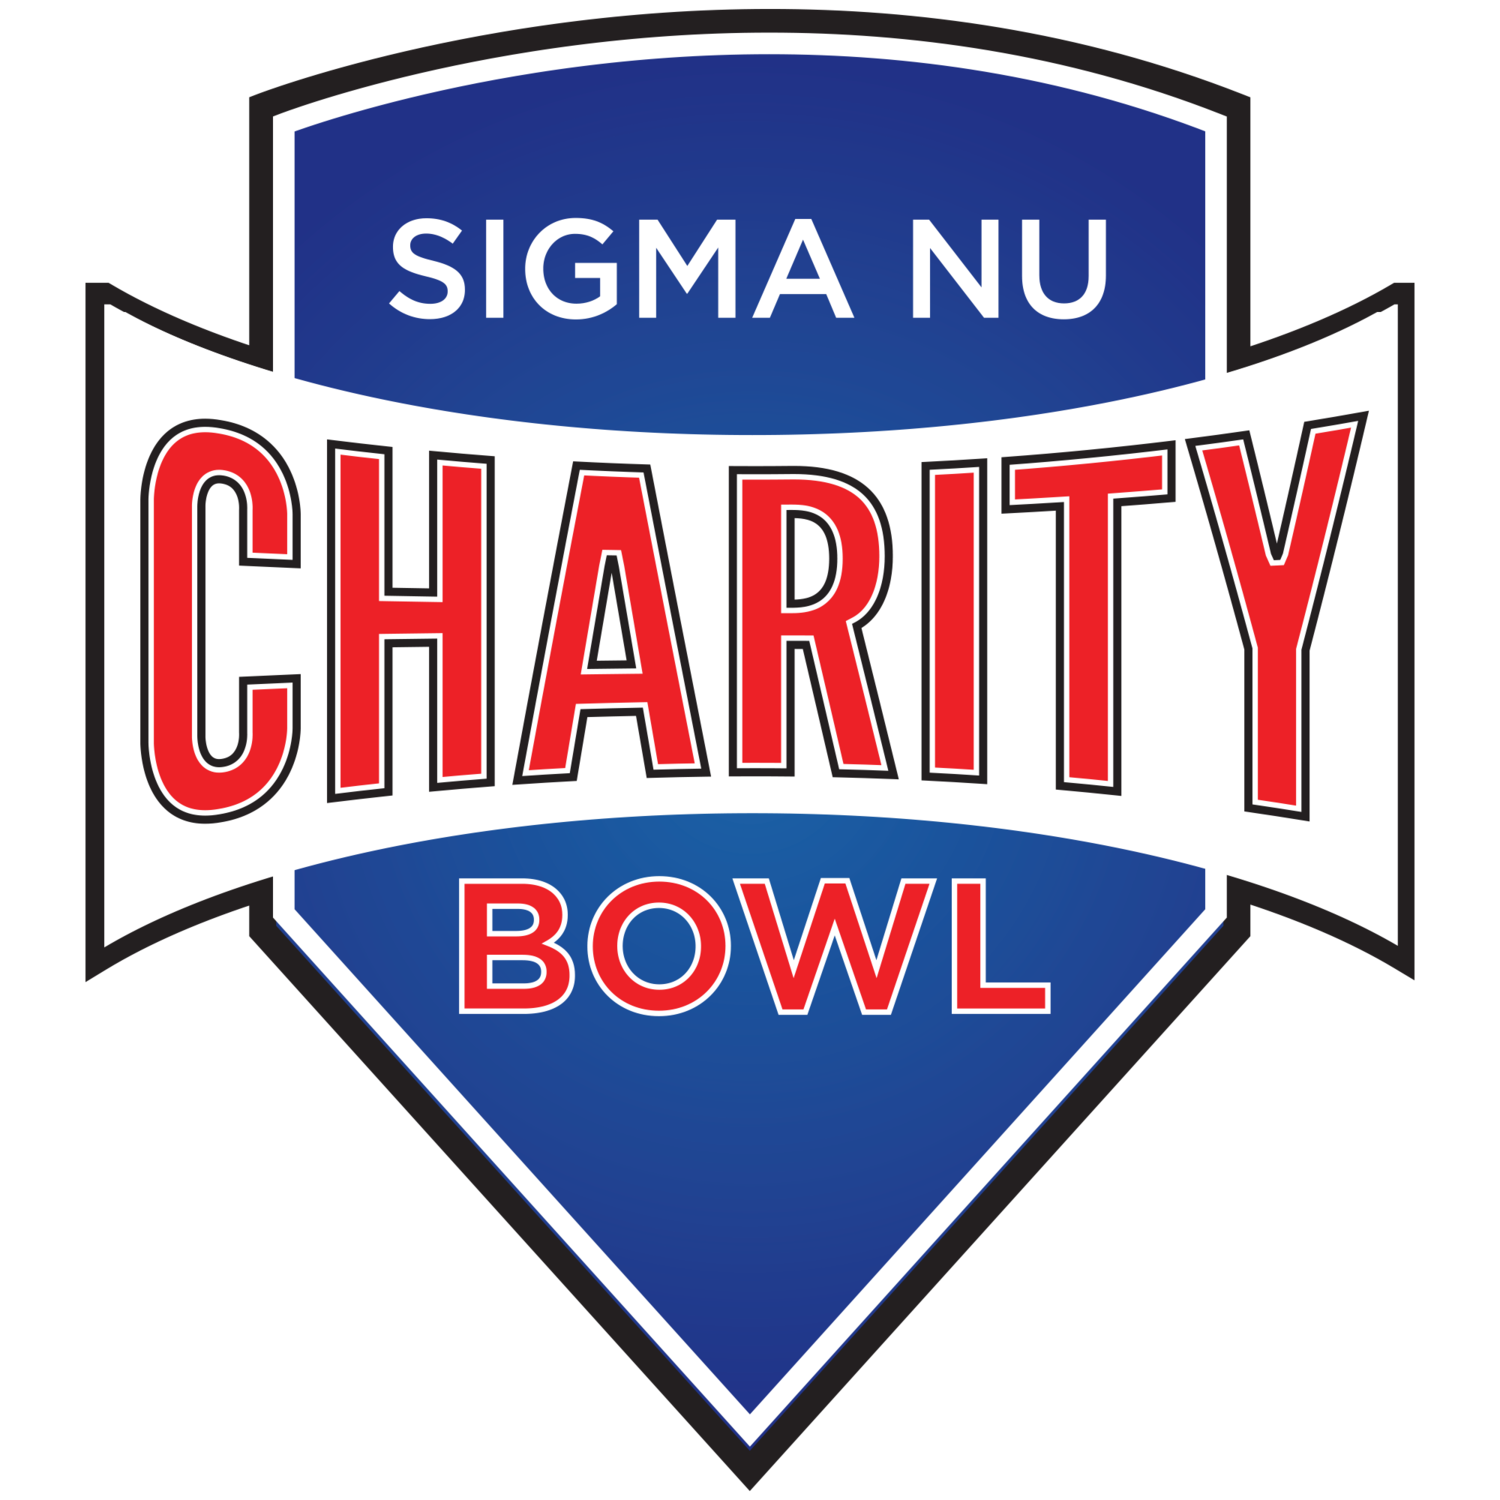 Sigma Nu Charity Bowl